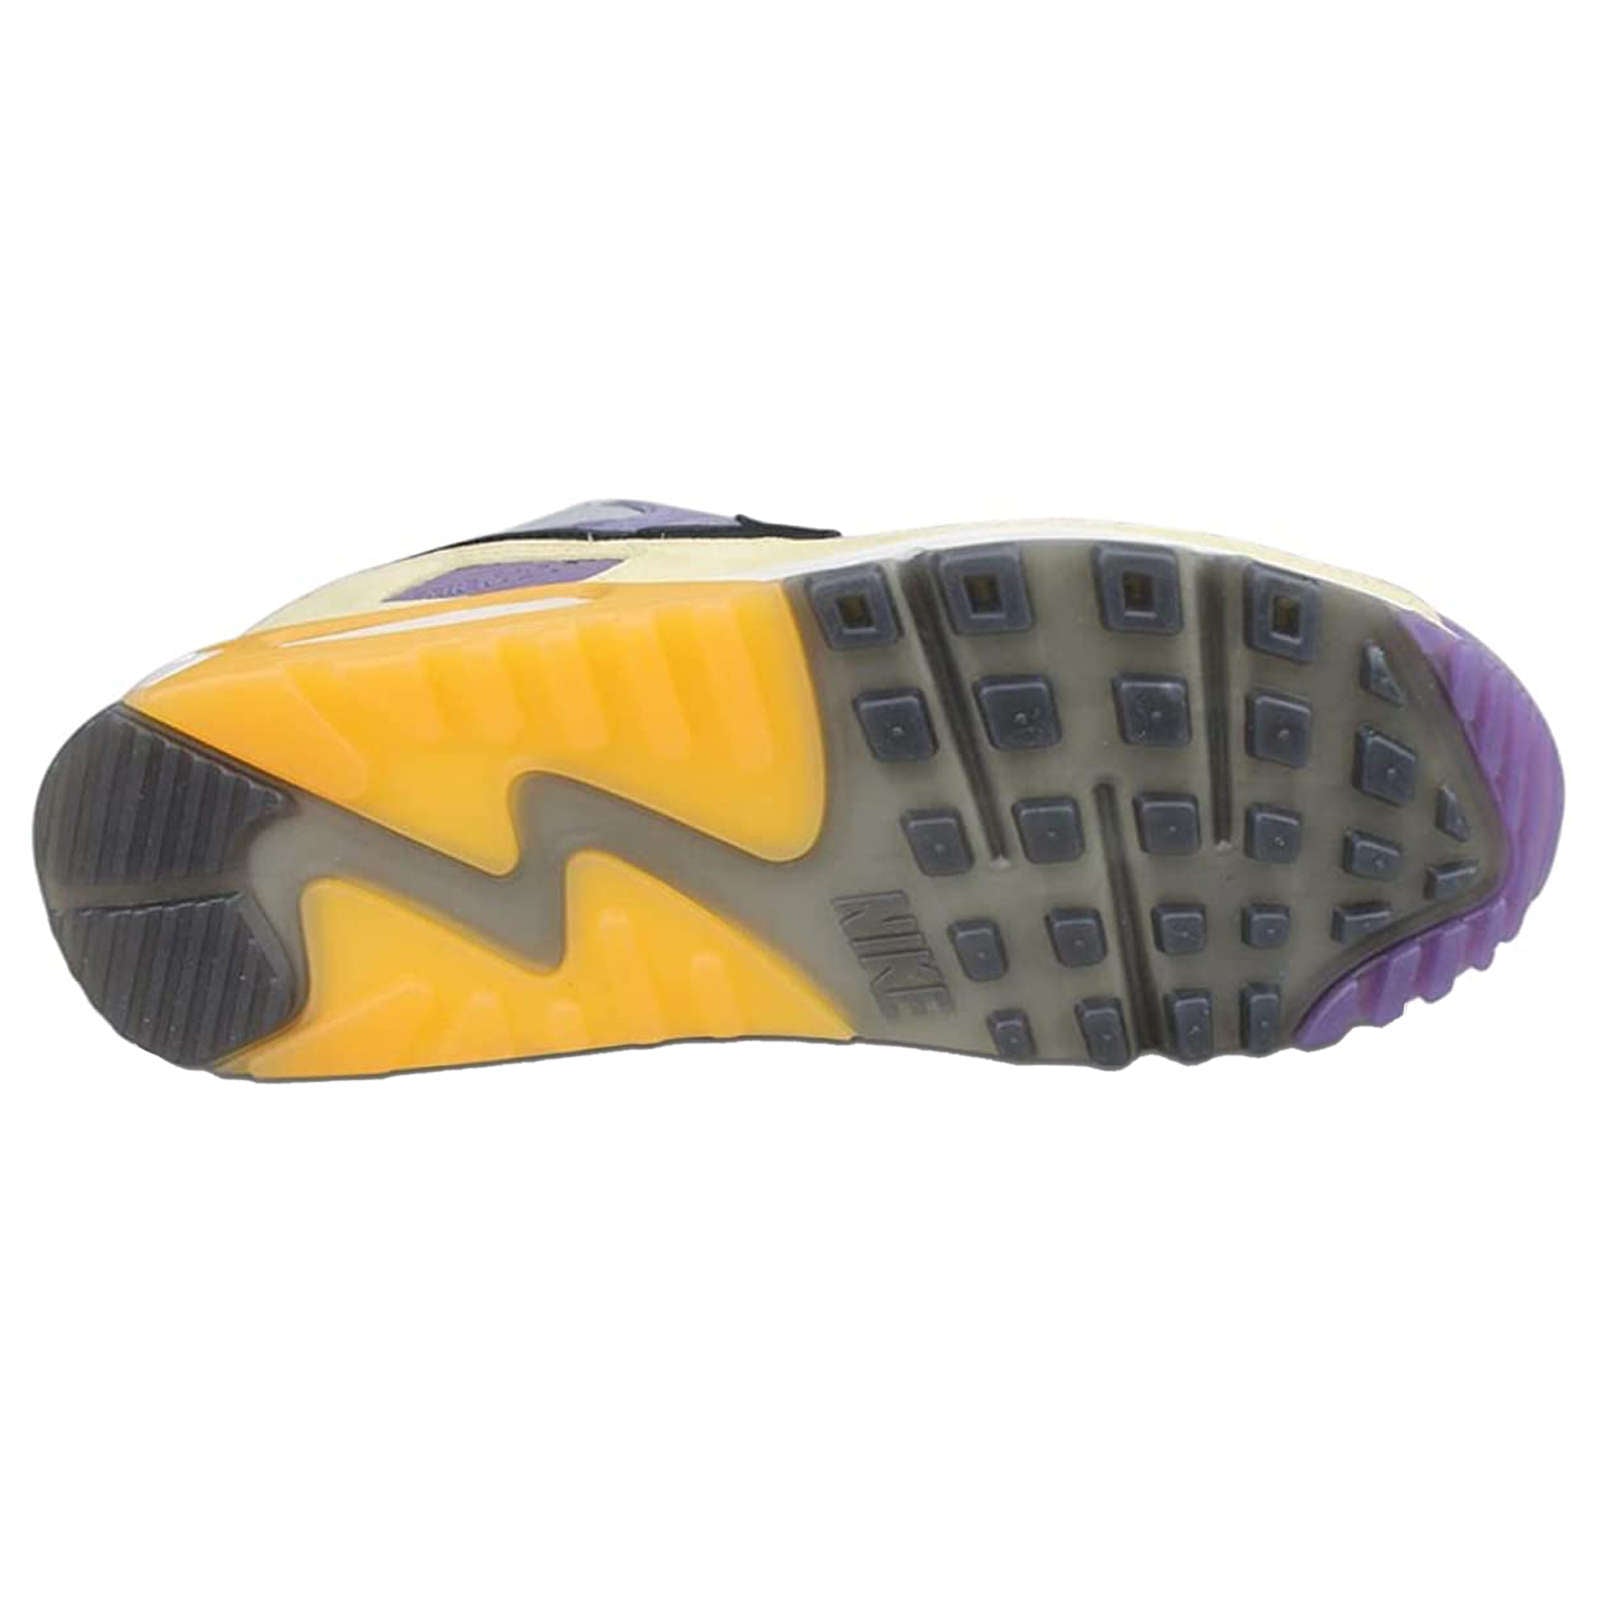 Nike Air Max 90 NRG Suede Leather Unisex Low-Top Trainers#color_court purple black lemon drop